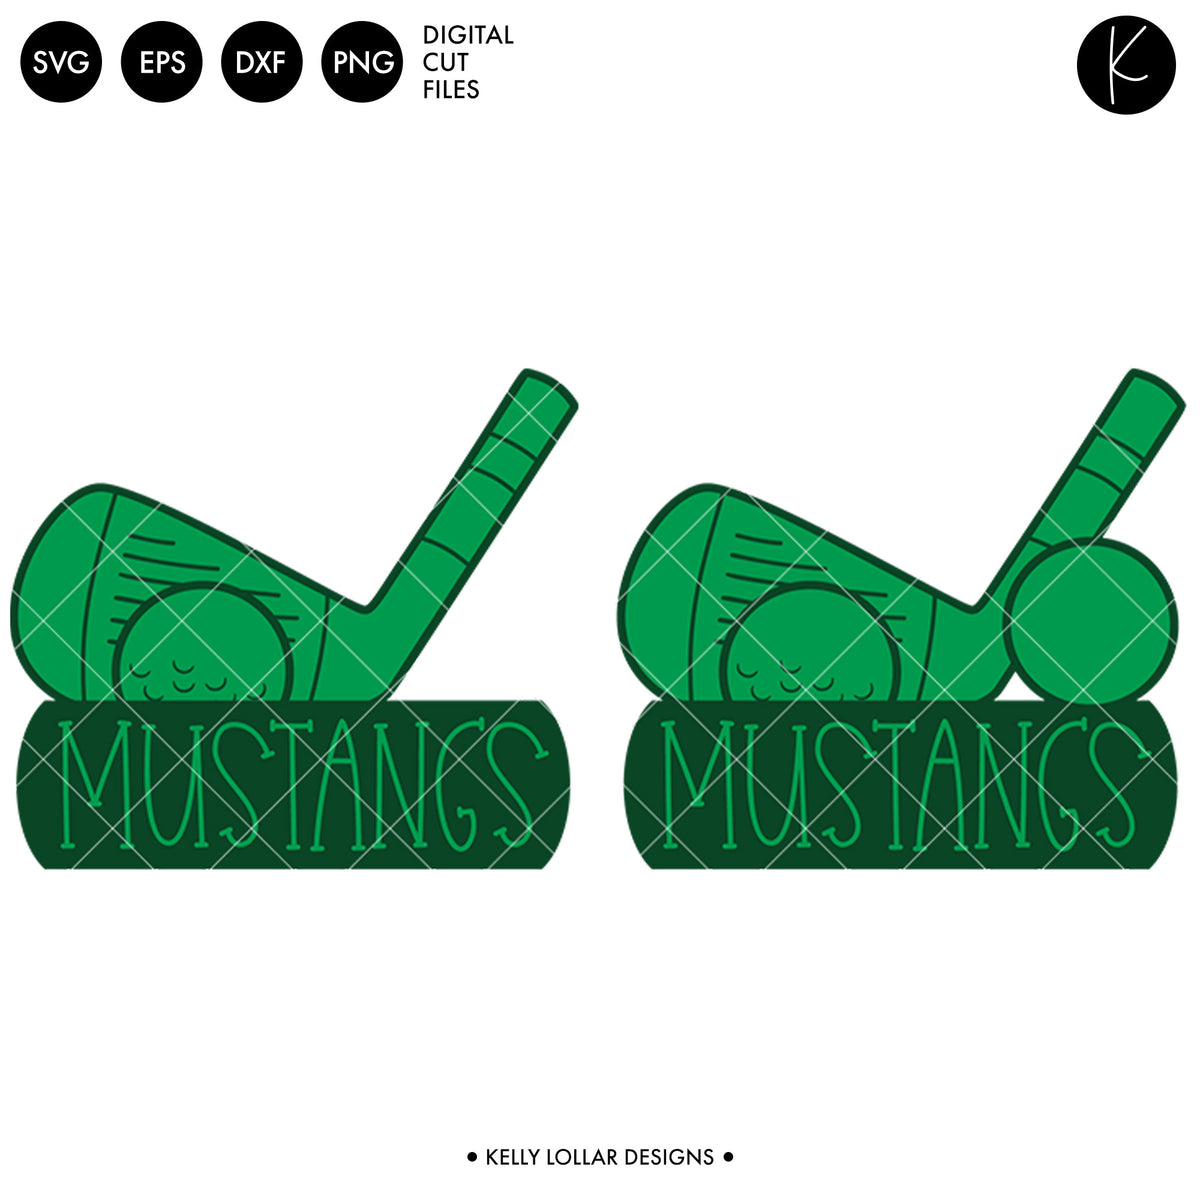 Mustangs Golf Bundle | SVG DXF EPS PNG Cut Files